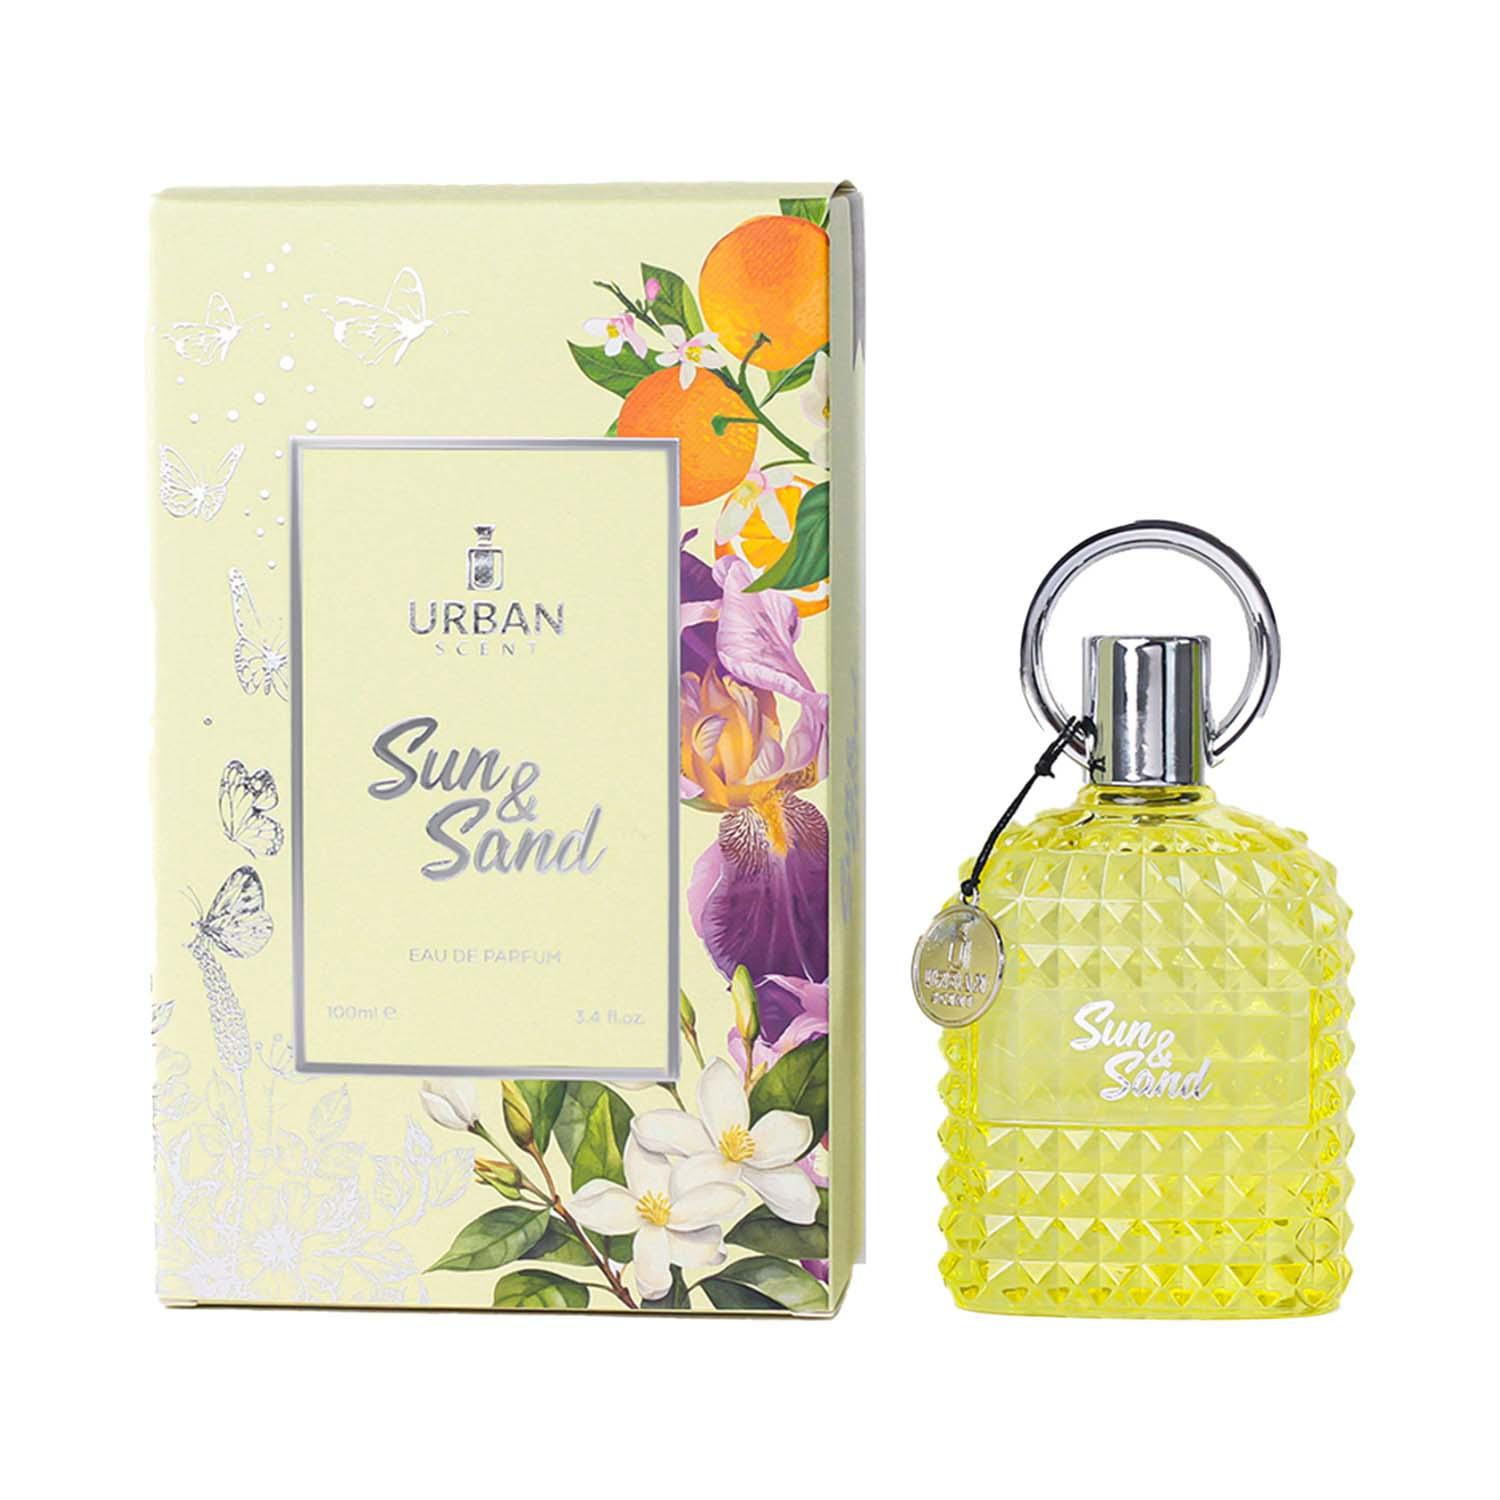 Lyla Blanc | Lyla Blanc Urban Scent Sun and Sand Long Lasting Perfume (100 ml)